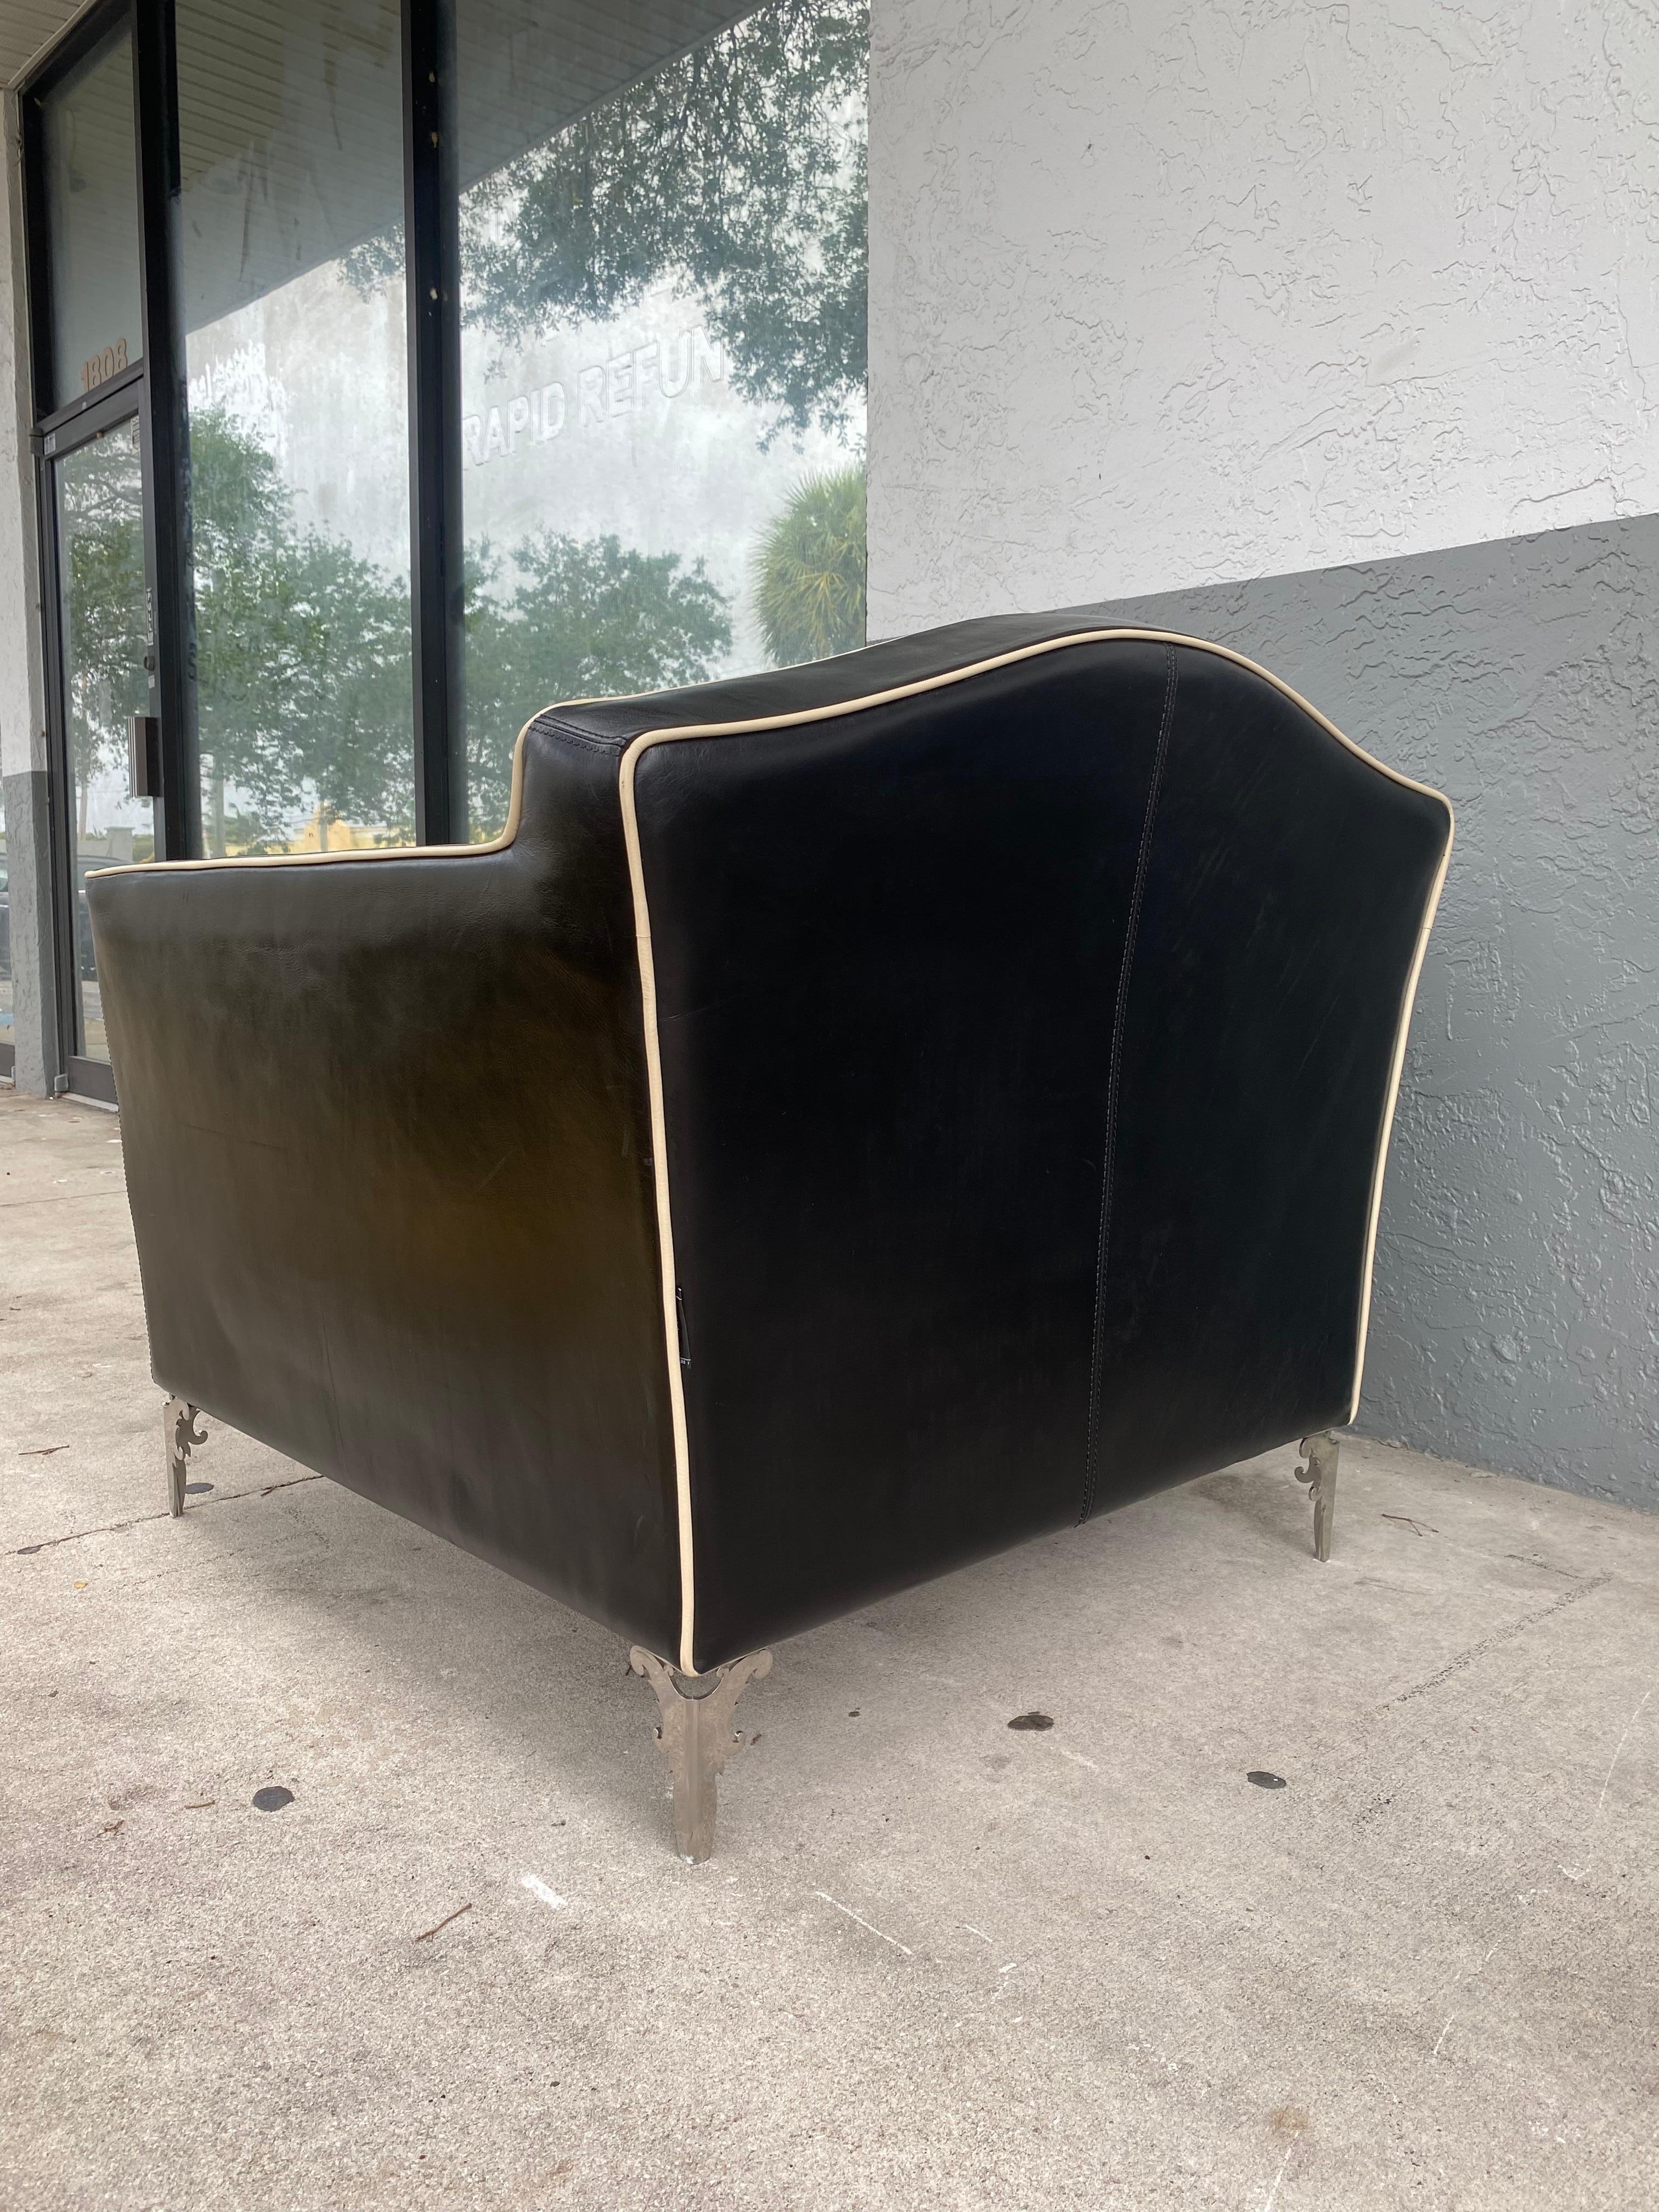 IPE Cavalli Black Calkskin Leather Chrome Chair For Sale 2